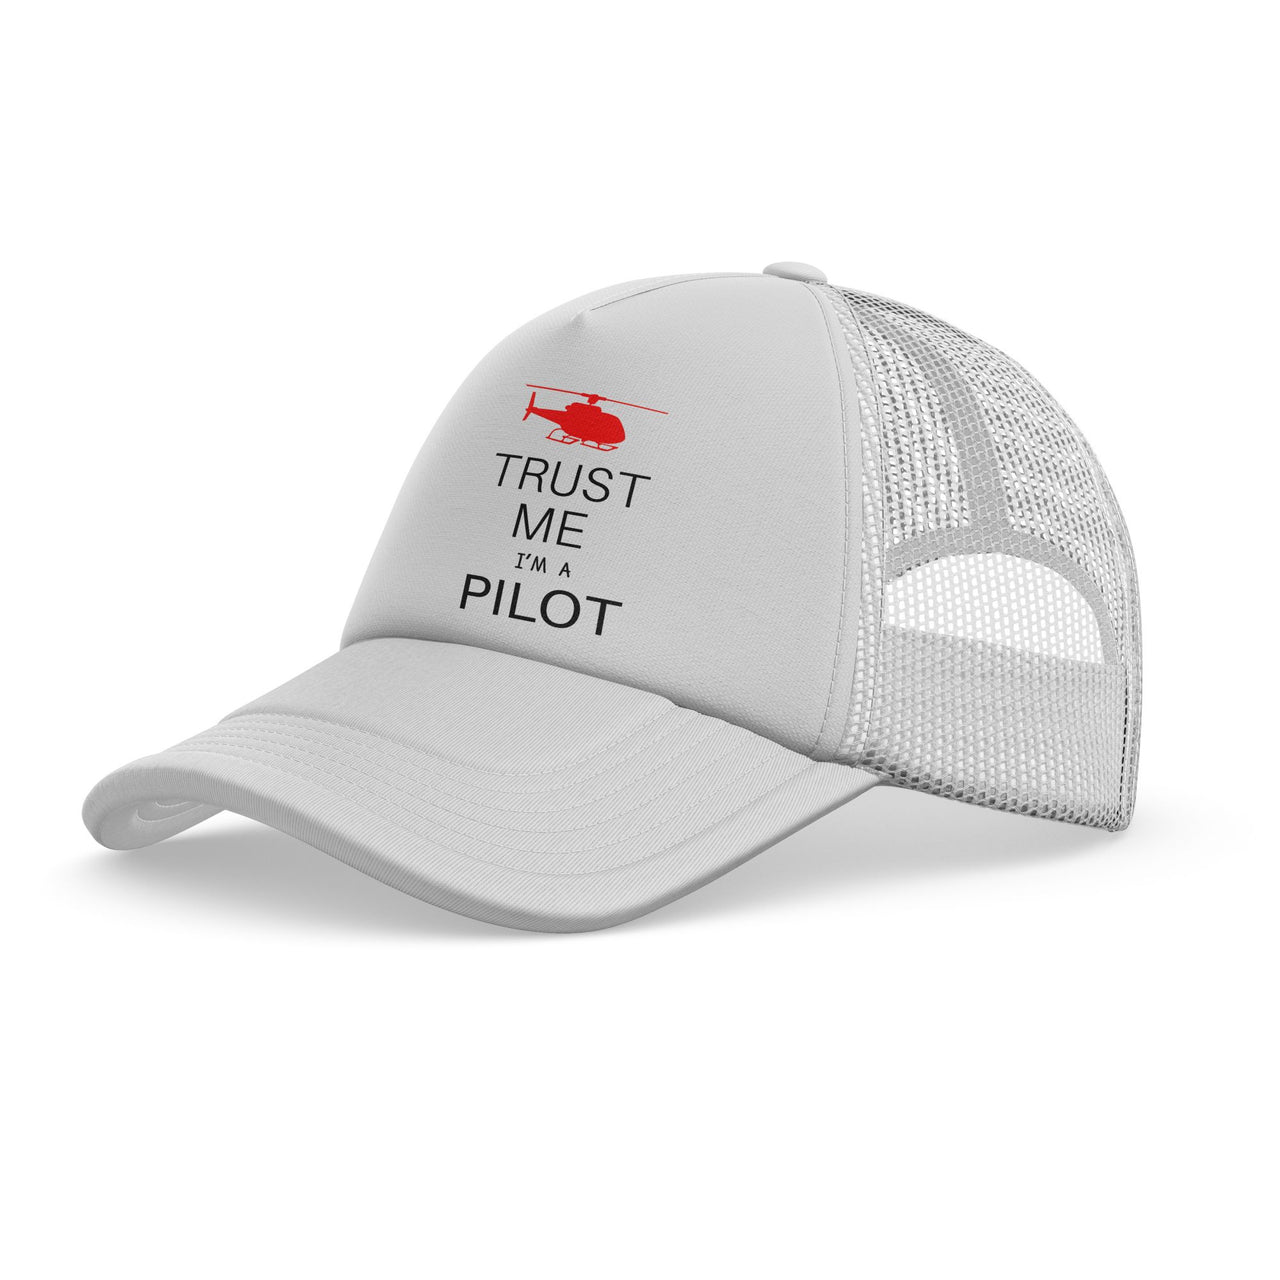 Trust Me I'm a Pilot (Helicopter) Designed Trucker Caps & Hats